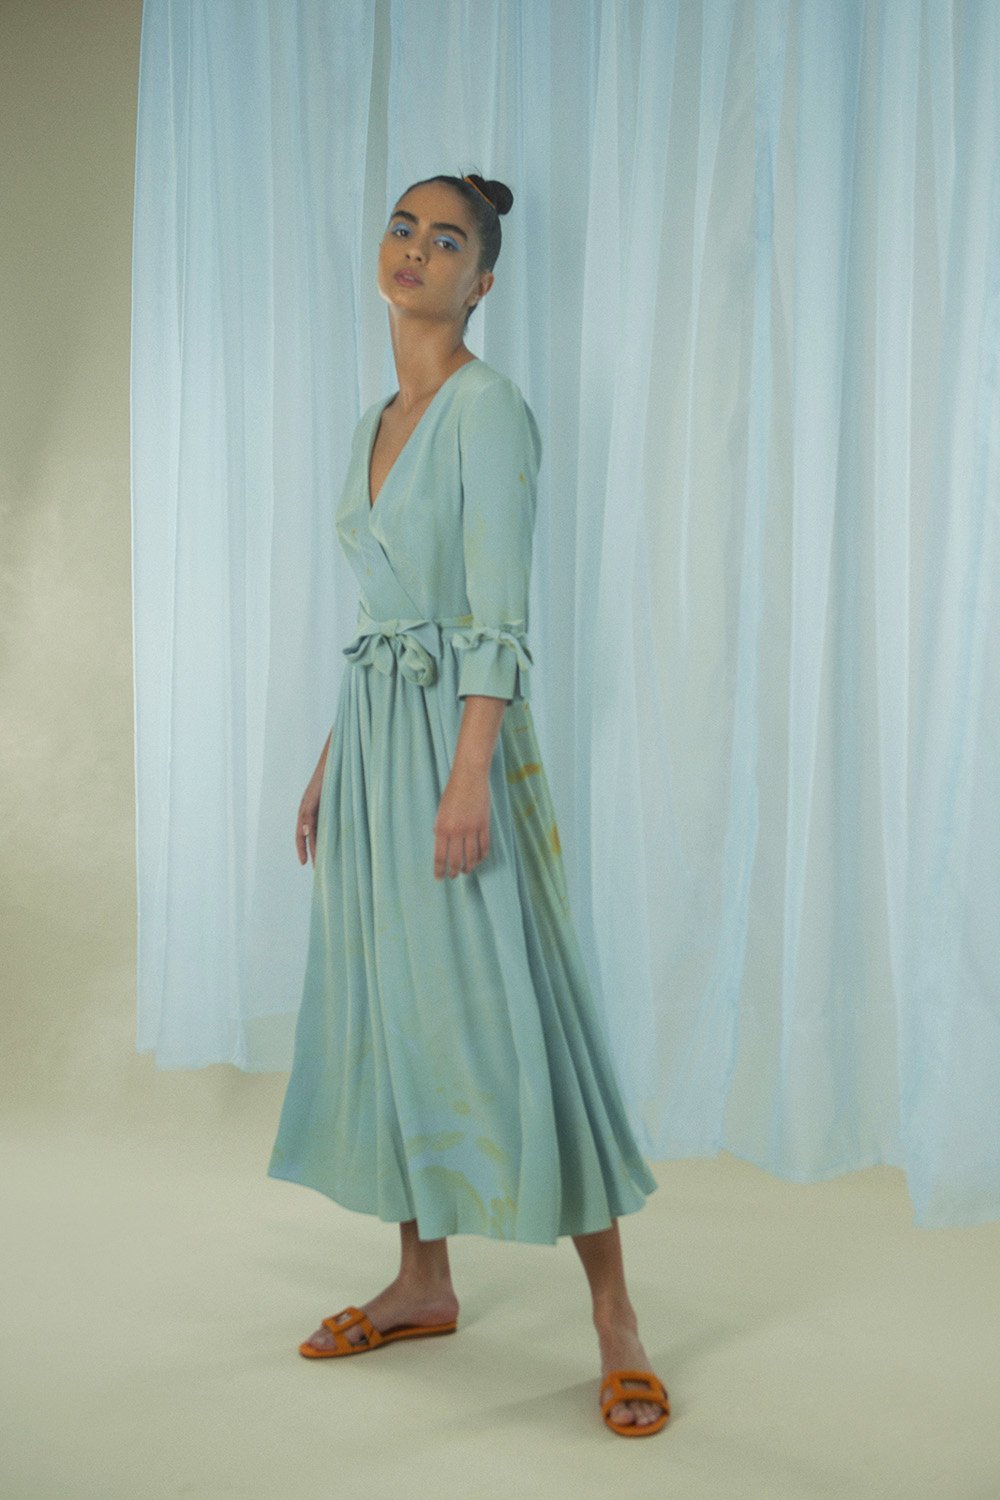 Duck Egg Blue Hand Marbled Silk Wrap Dress - Edward Mongzar - The Clothing LoungeEdward Mongzar